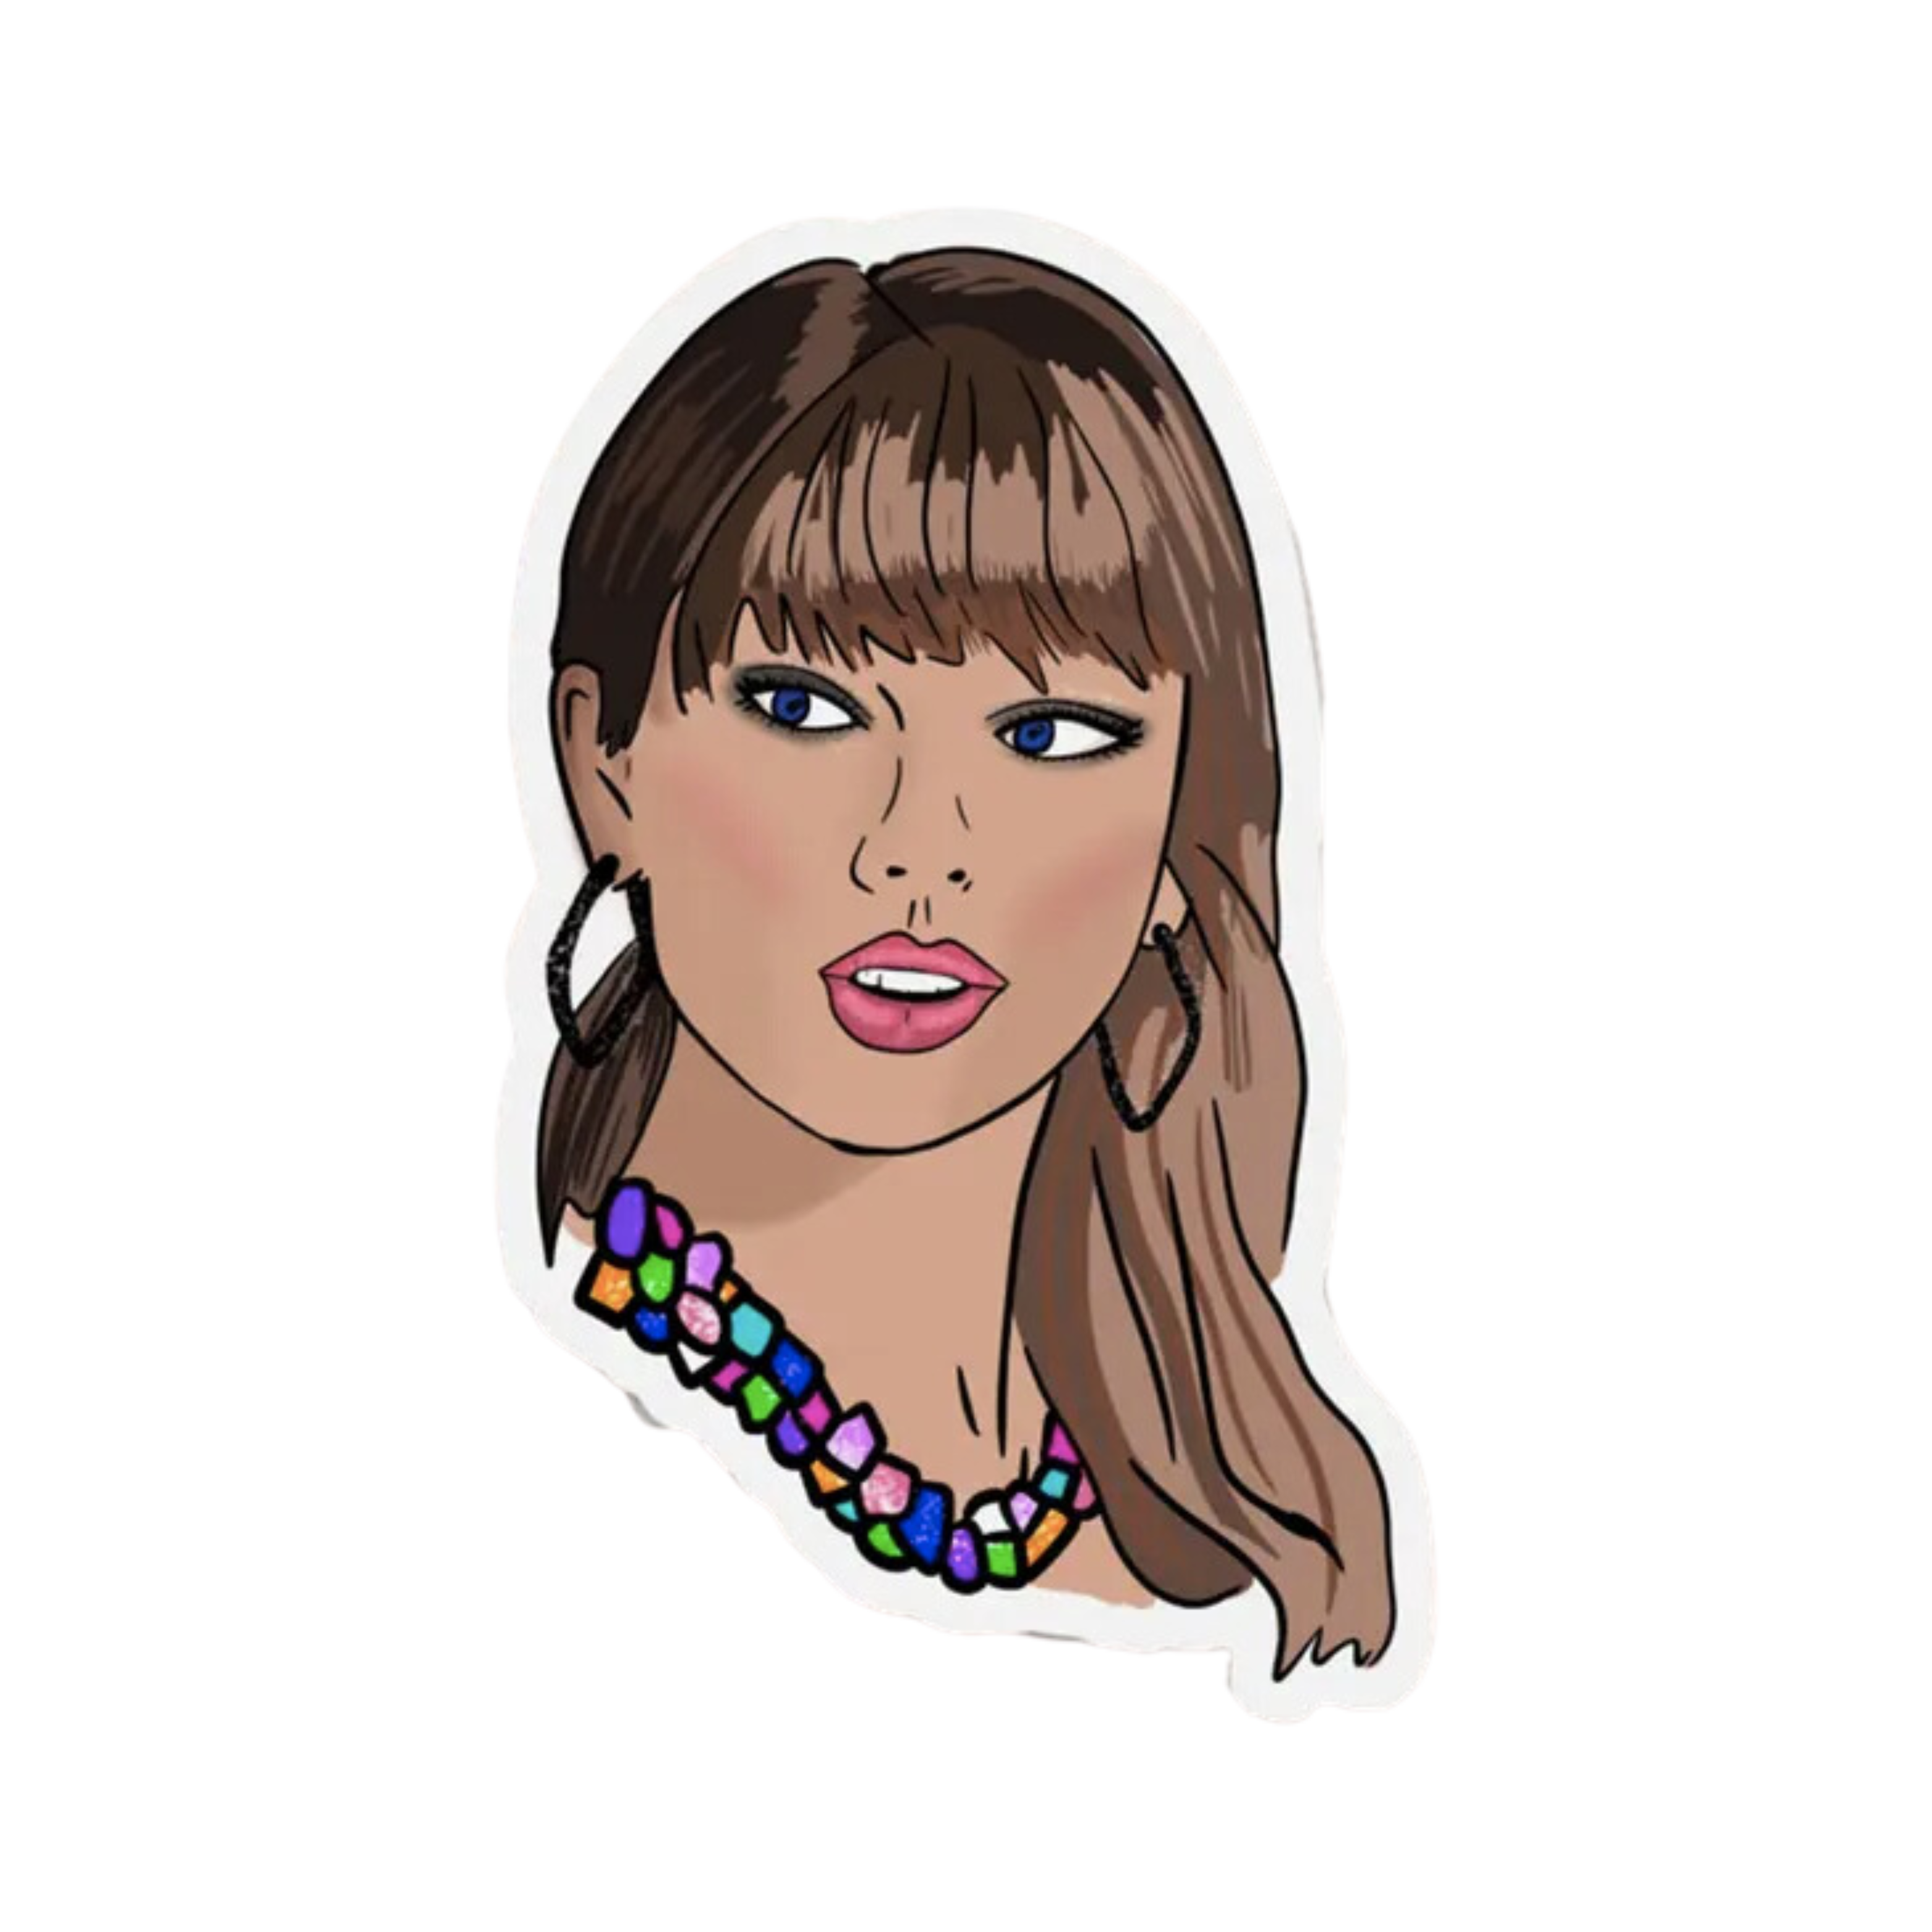 Taylor Swift Speak Now Taylor's Version Sticker – Golden Hour Gift Co